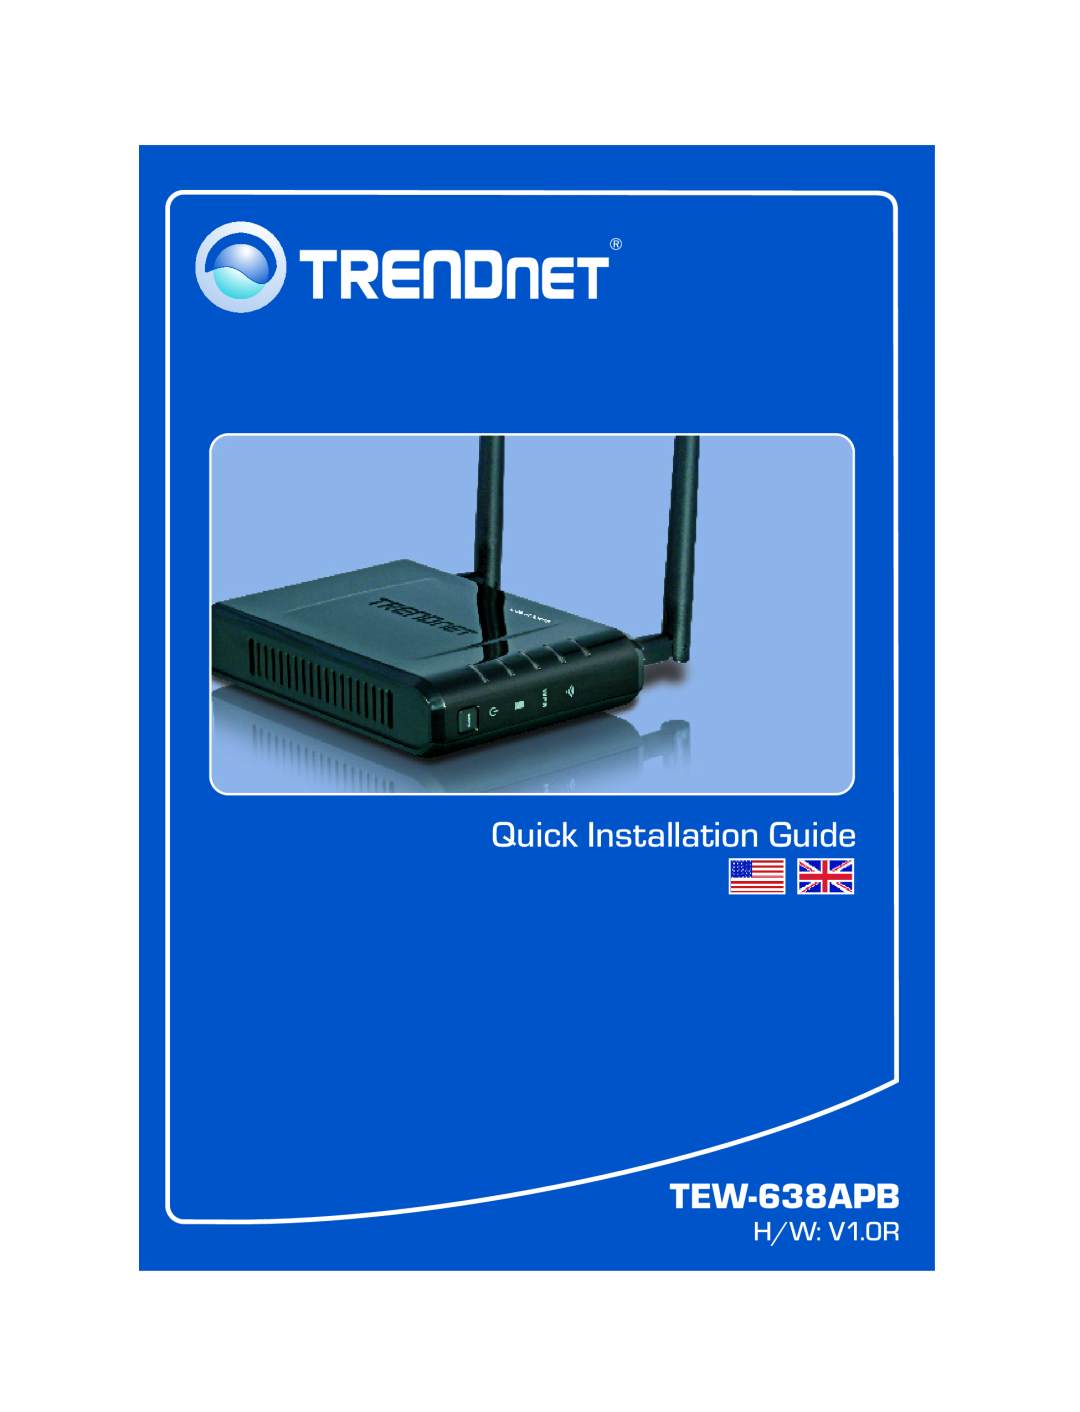 TRENDnet TEW-638APB manual Quick Installation Guide 